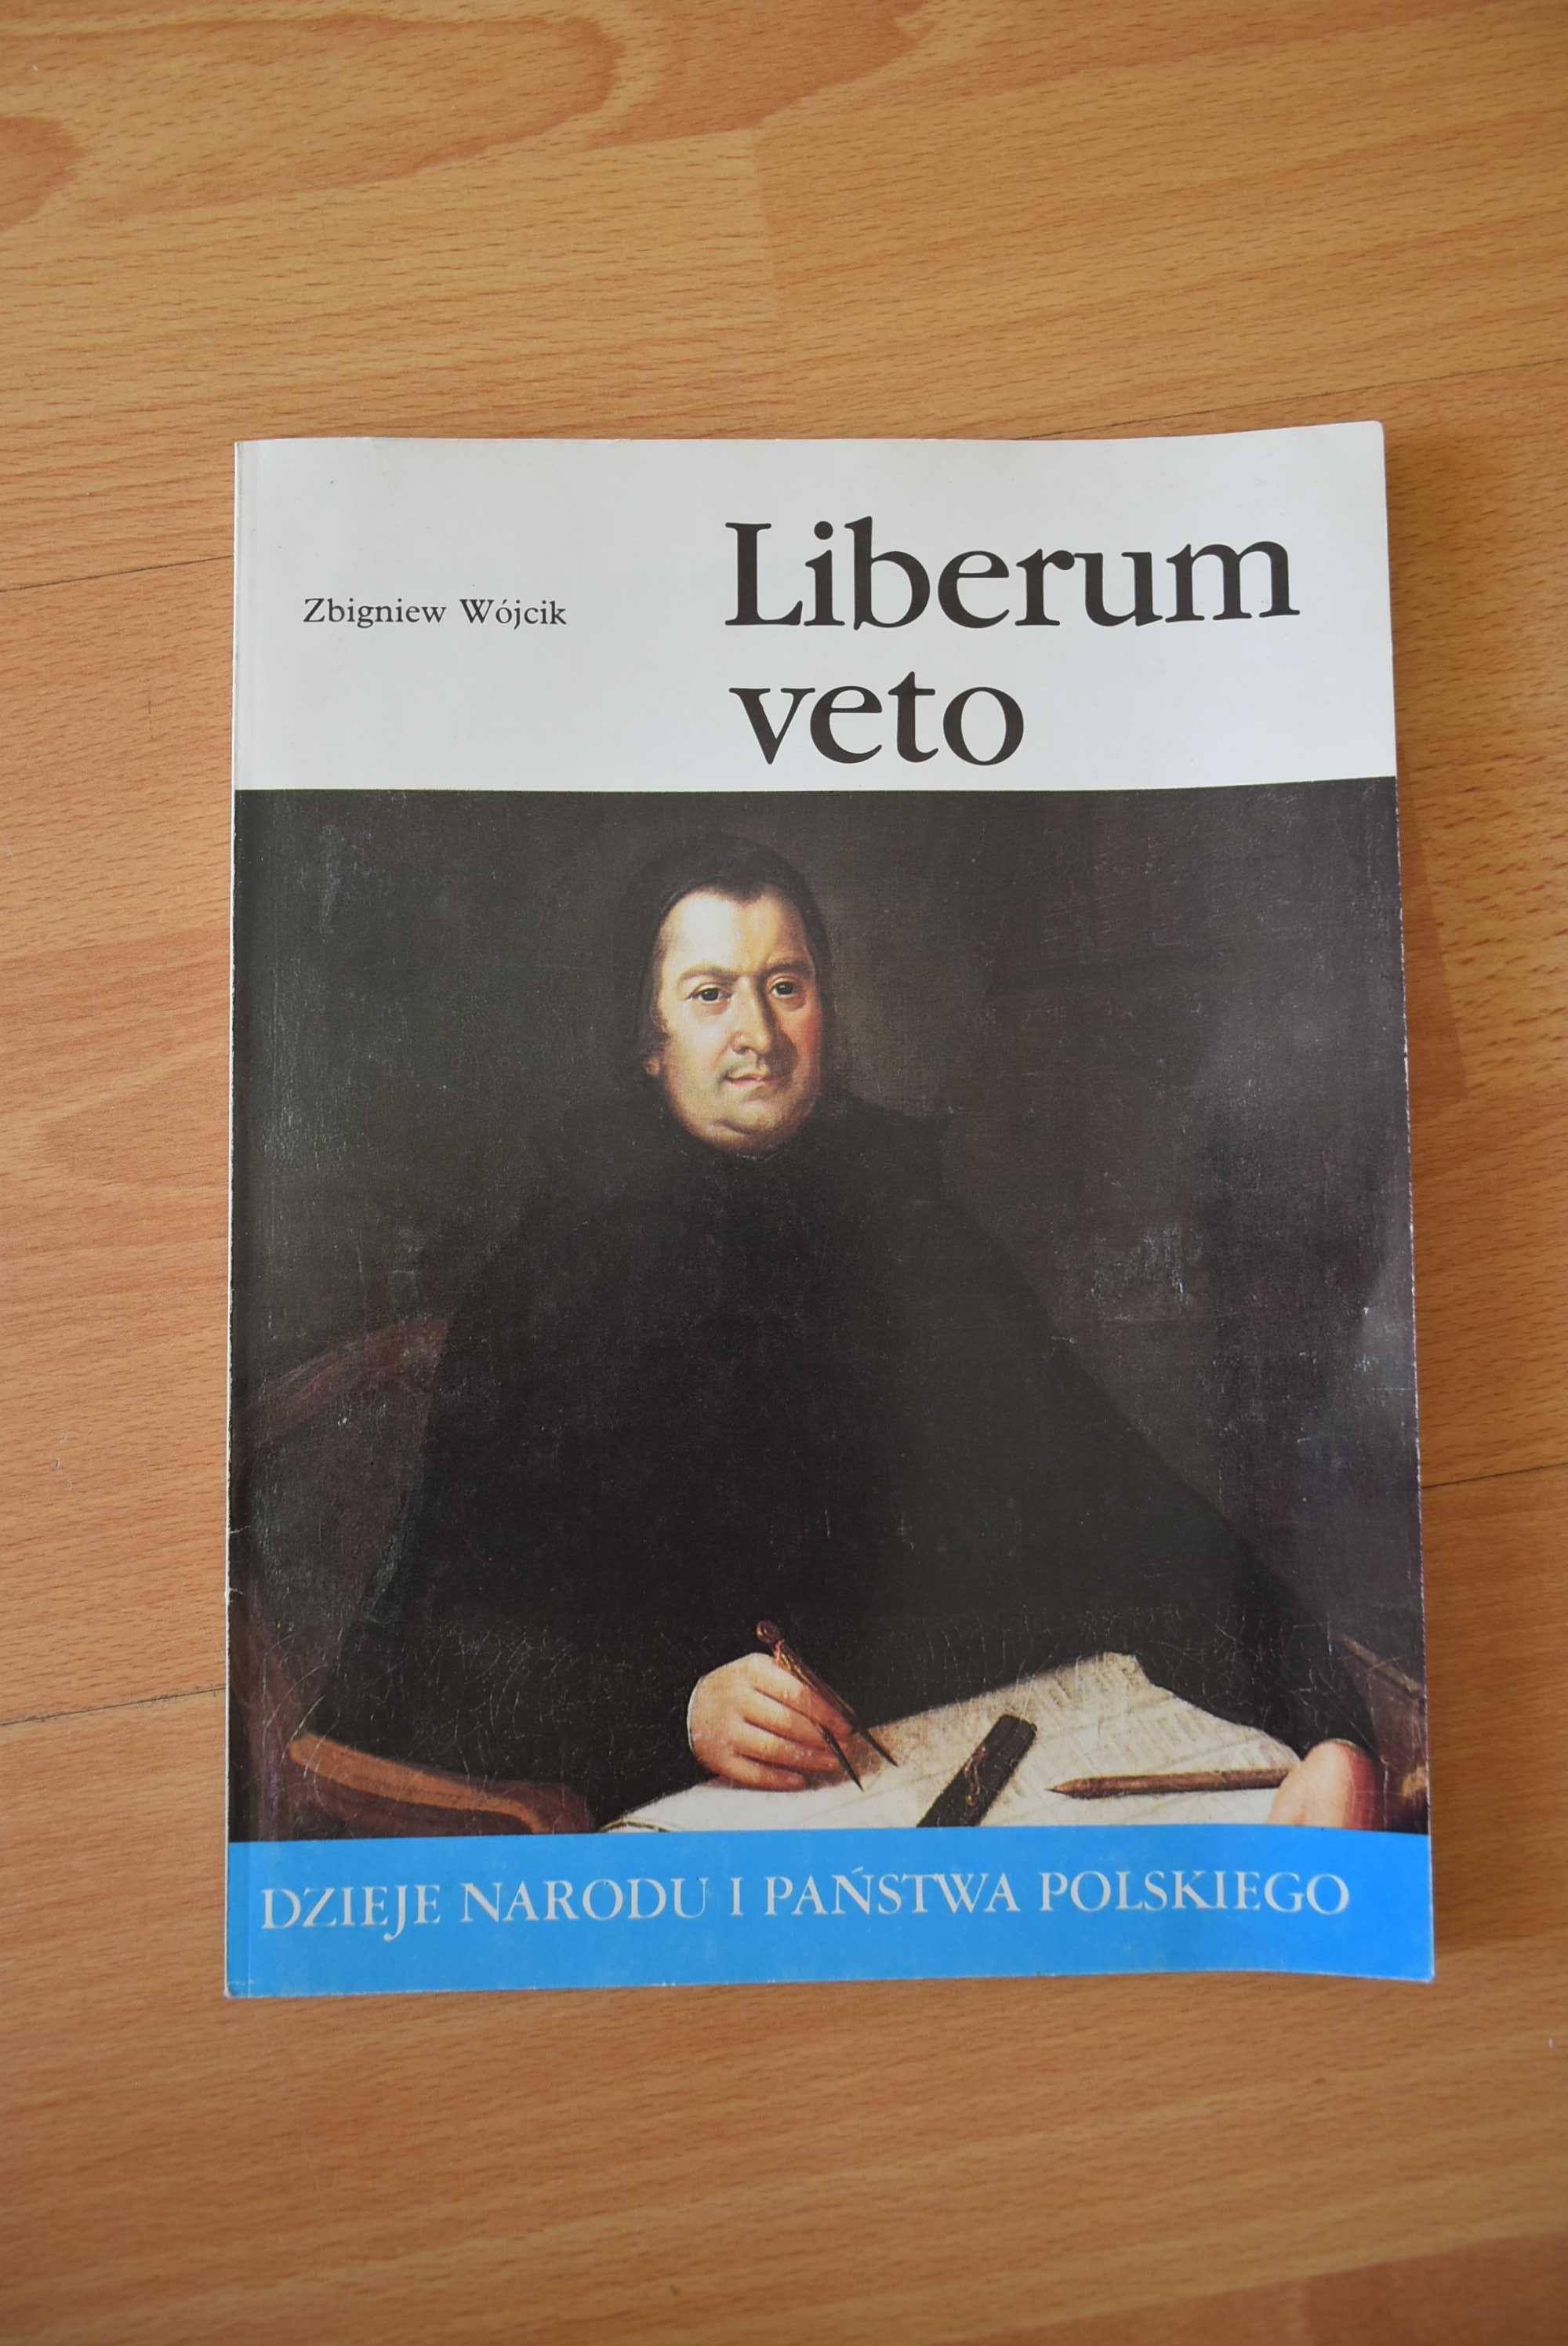 Liberum veto – Zbigniew Wójcik